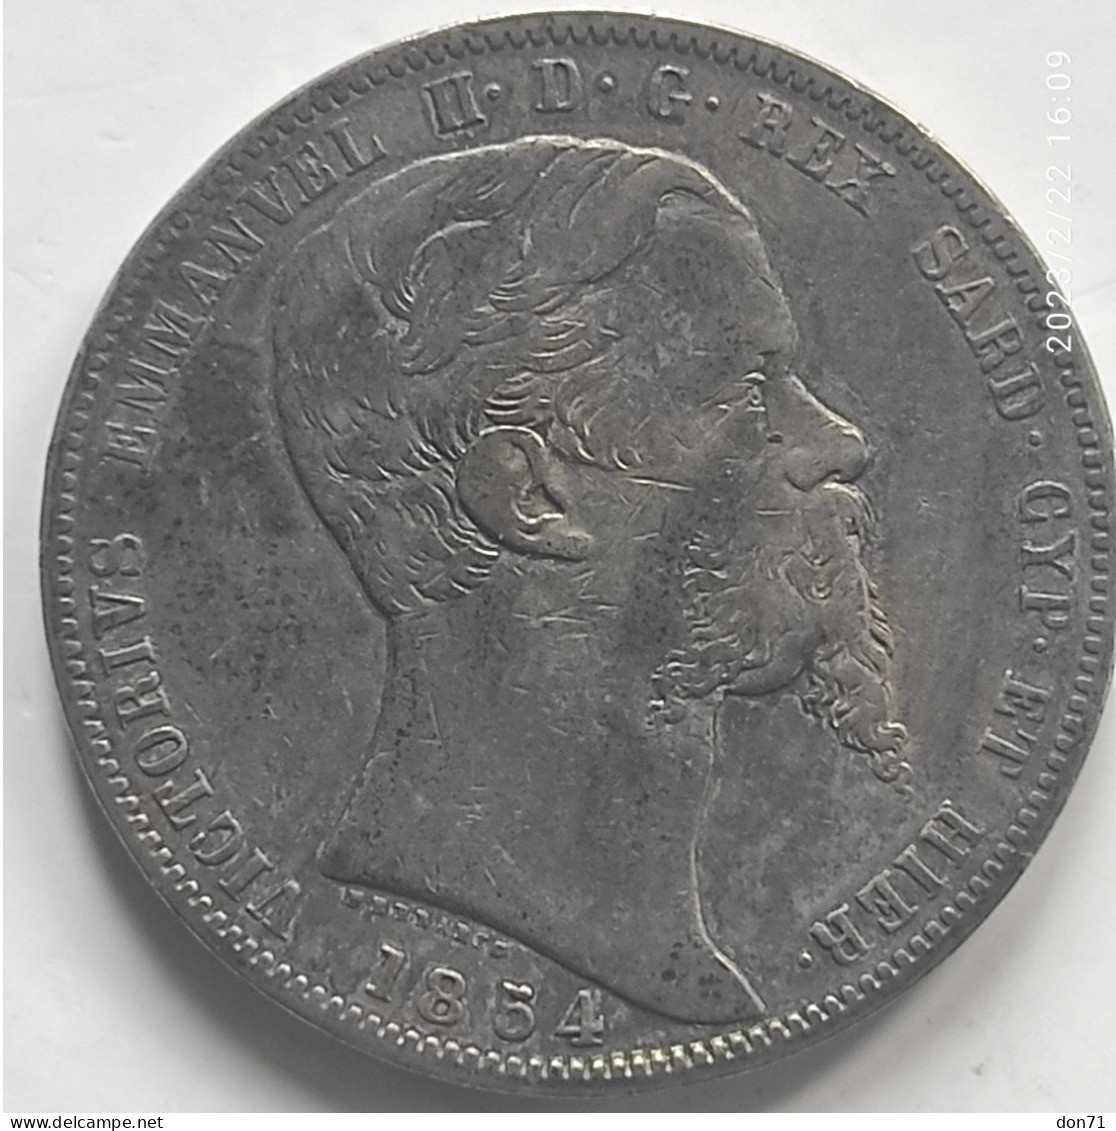 Sardegna - 5 lire 1854 (G)